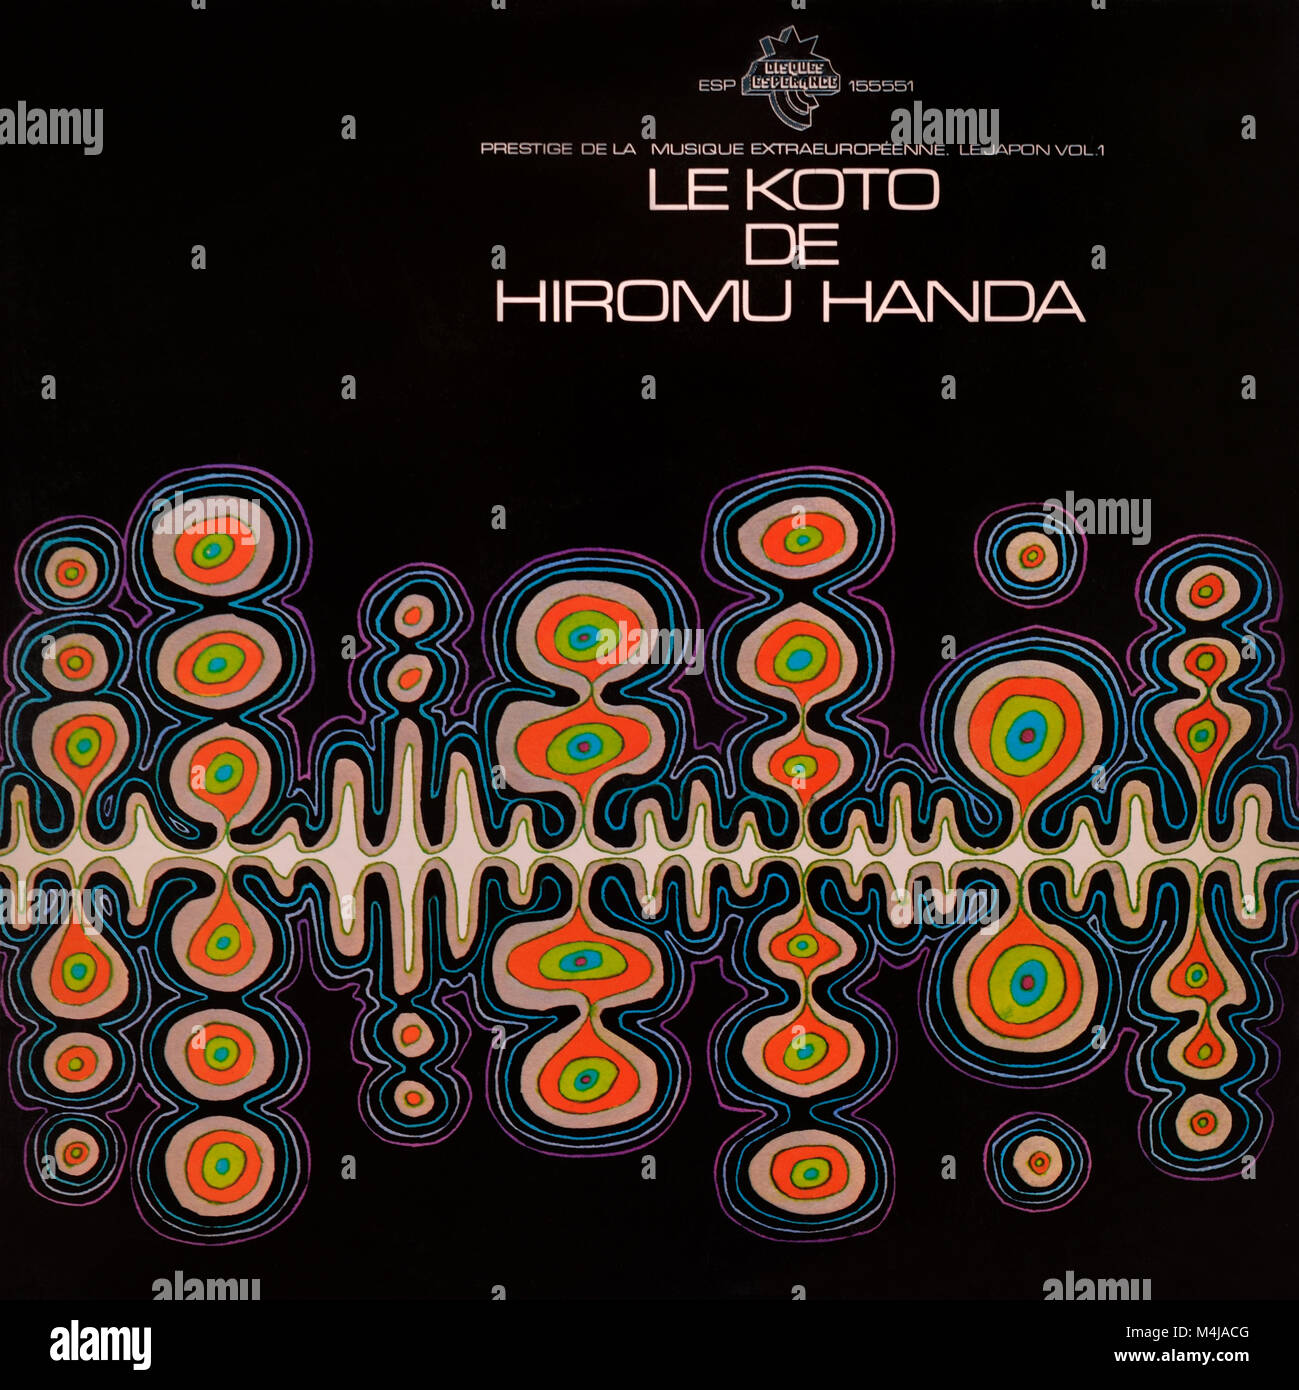 Hiromu Handa - copertina originale dell'album in vinile - le Koto de Hiromu Handa - 1977 Foto Stock